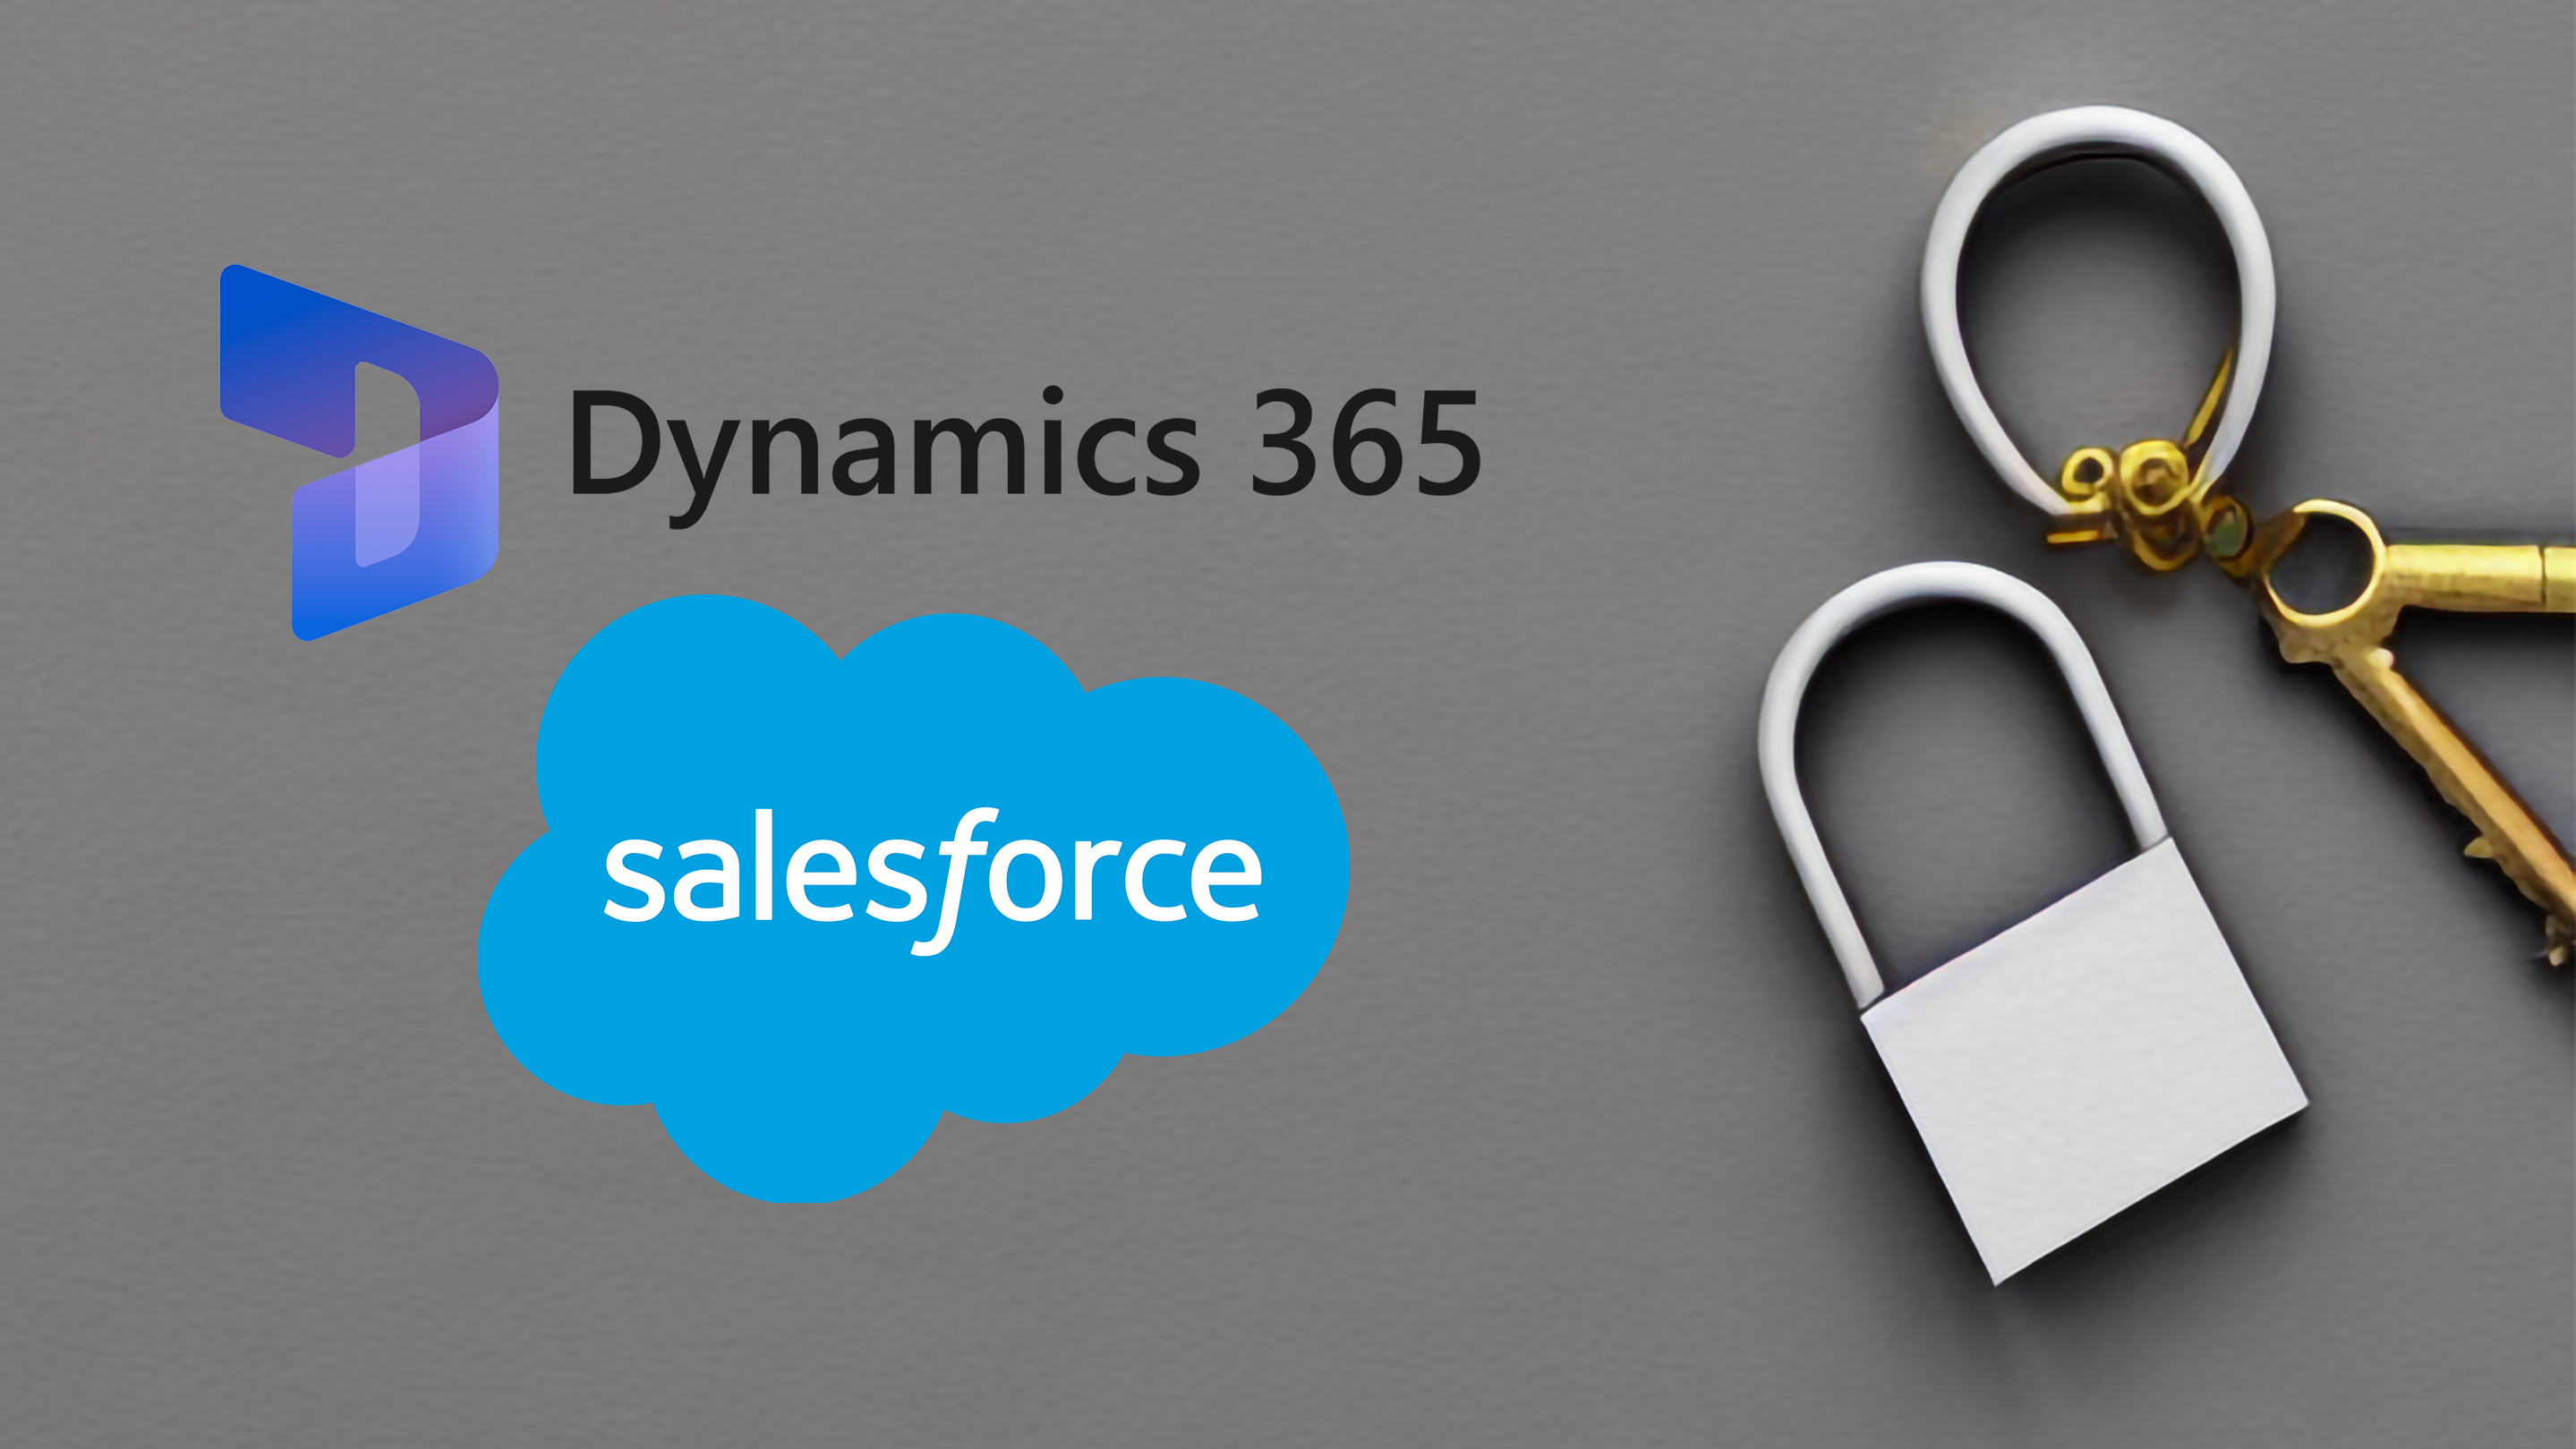 dynamics 365 vs salesforce,microsoft dynamics 365 vs salesforce,salesforce vs dynamics 365,salesforce vs ms dynamics 365,salesforce vs dynamics 365 comparison,salesforce vs dynamics 365 pros and cons